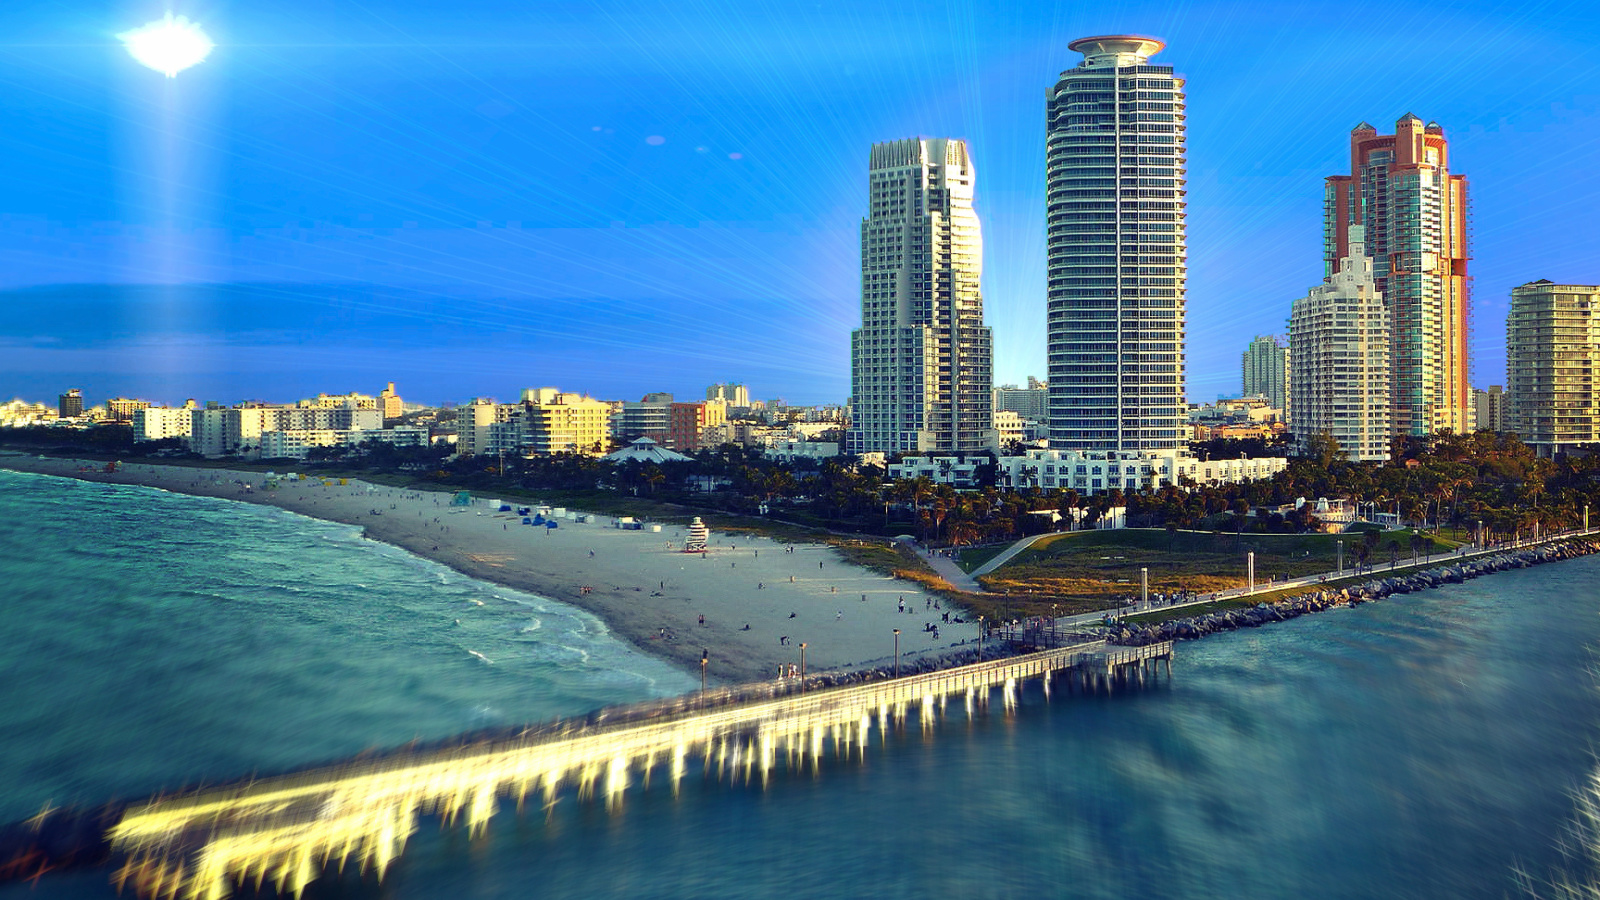 Das Miami Beach with Hotels Wallpaper 1600x900